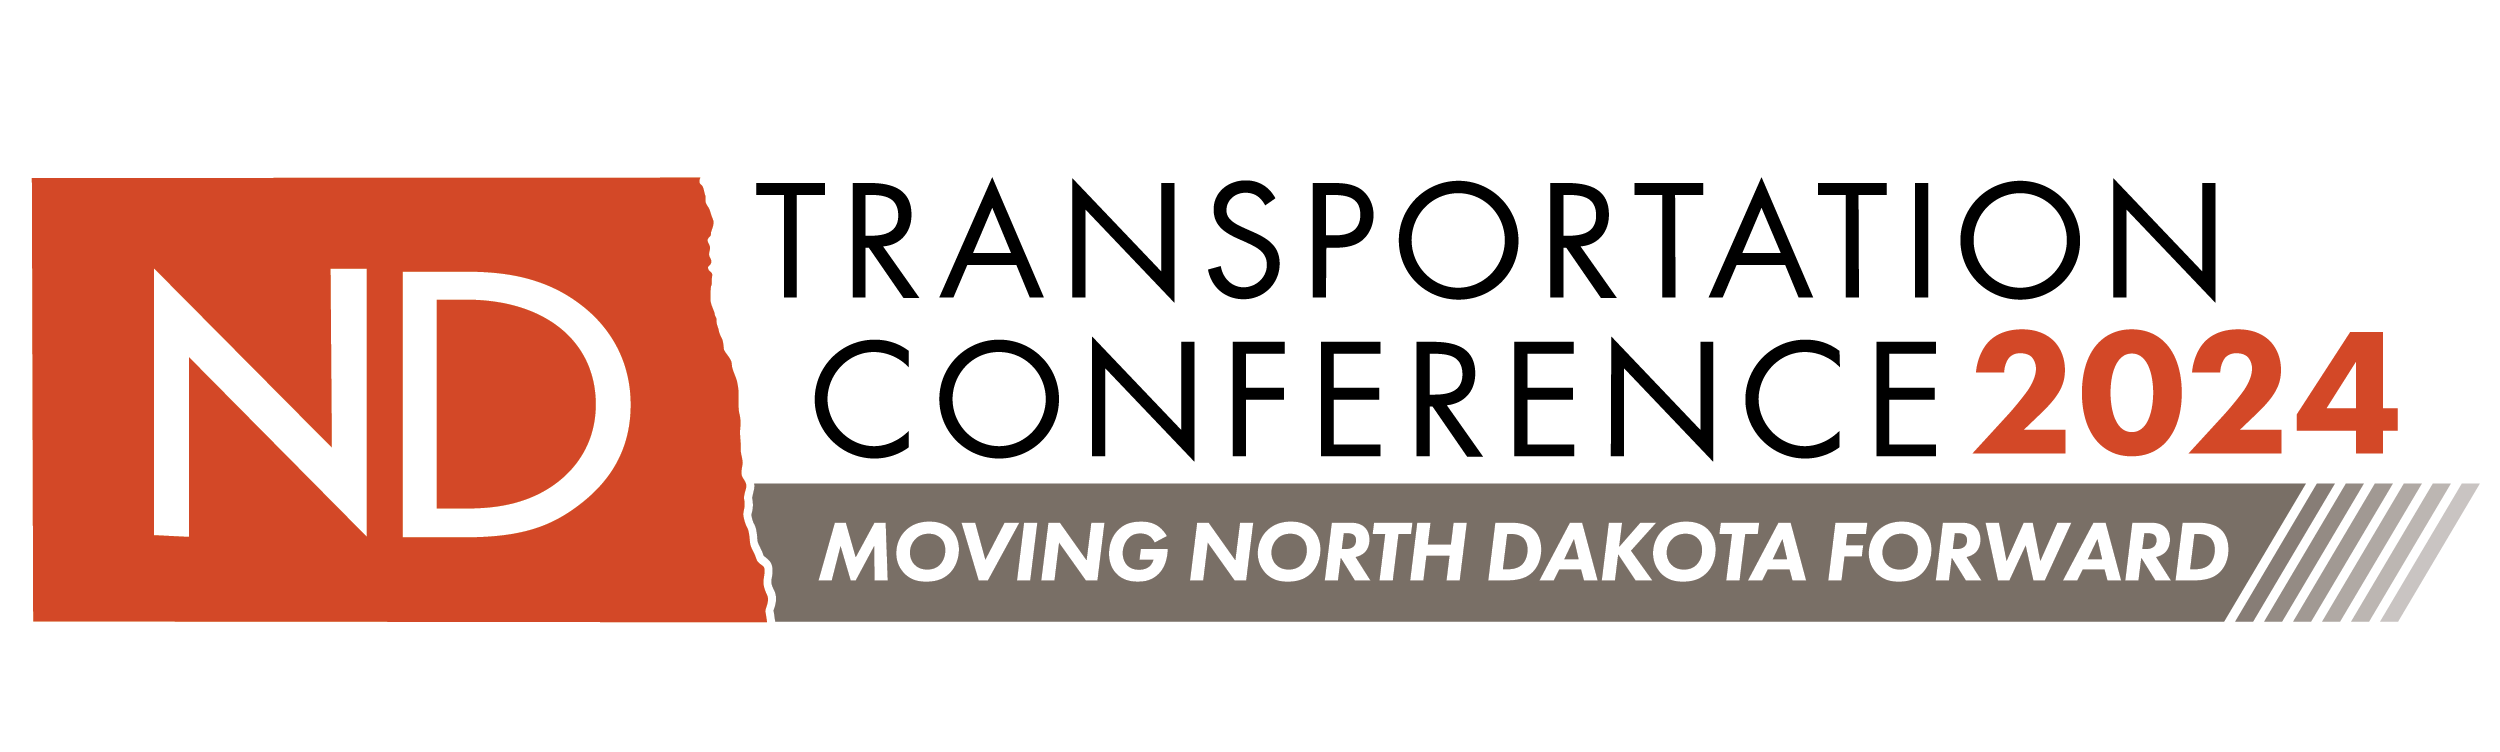 North Dakota Transportation Conference